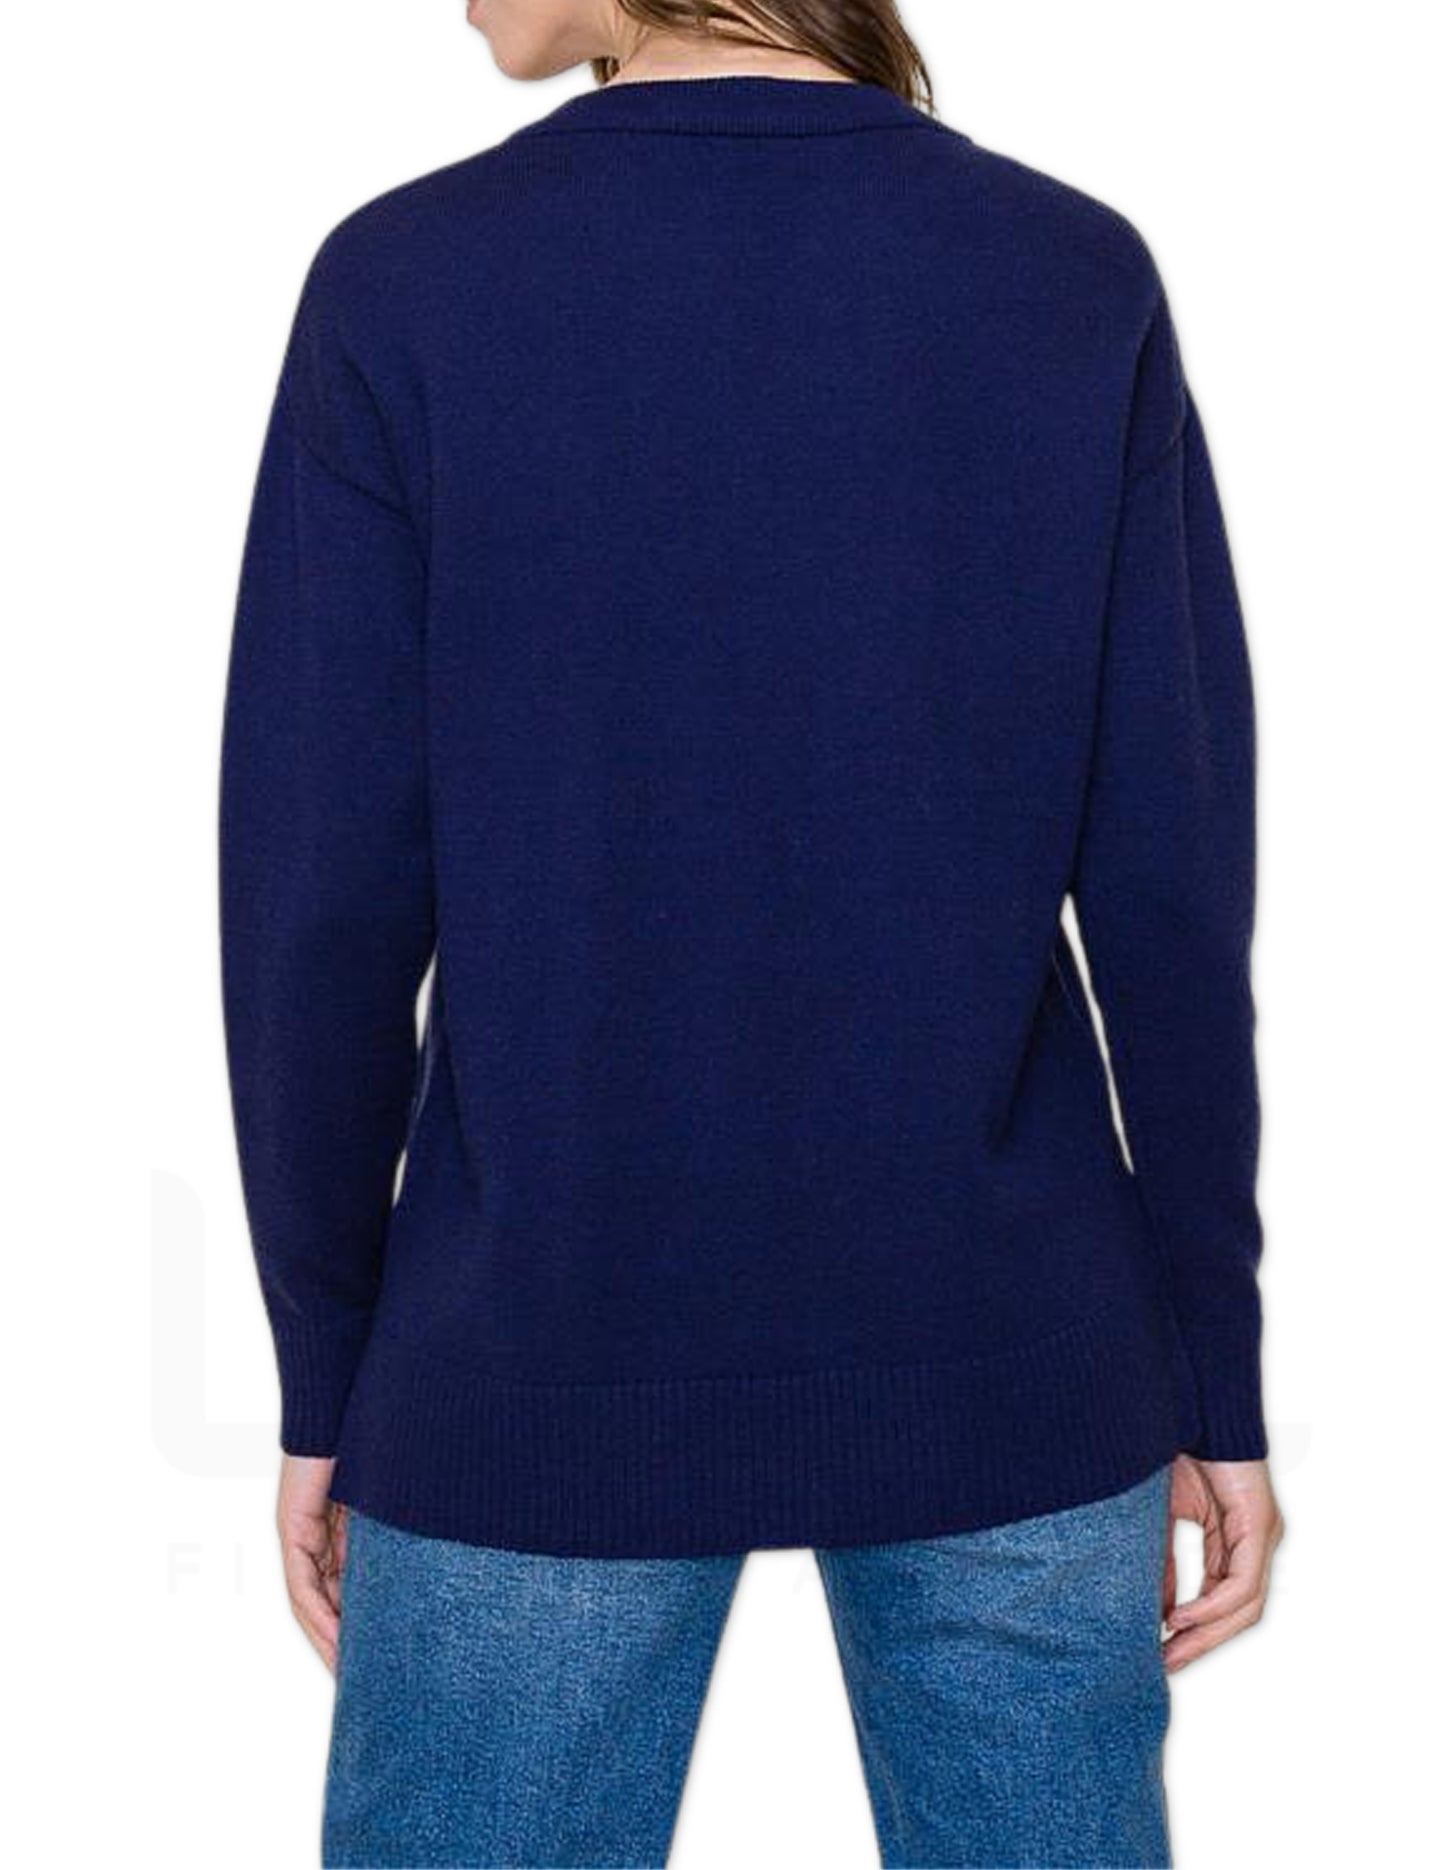 Split Neck Pullover Sweater - Navy